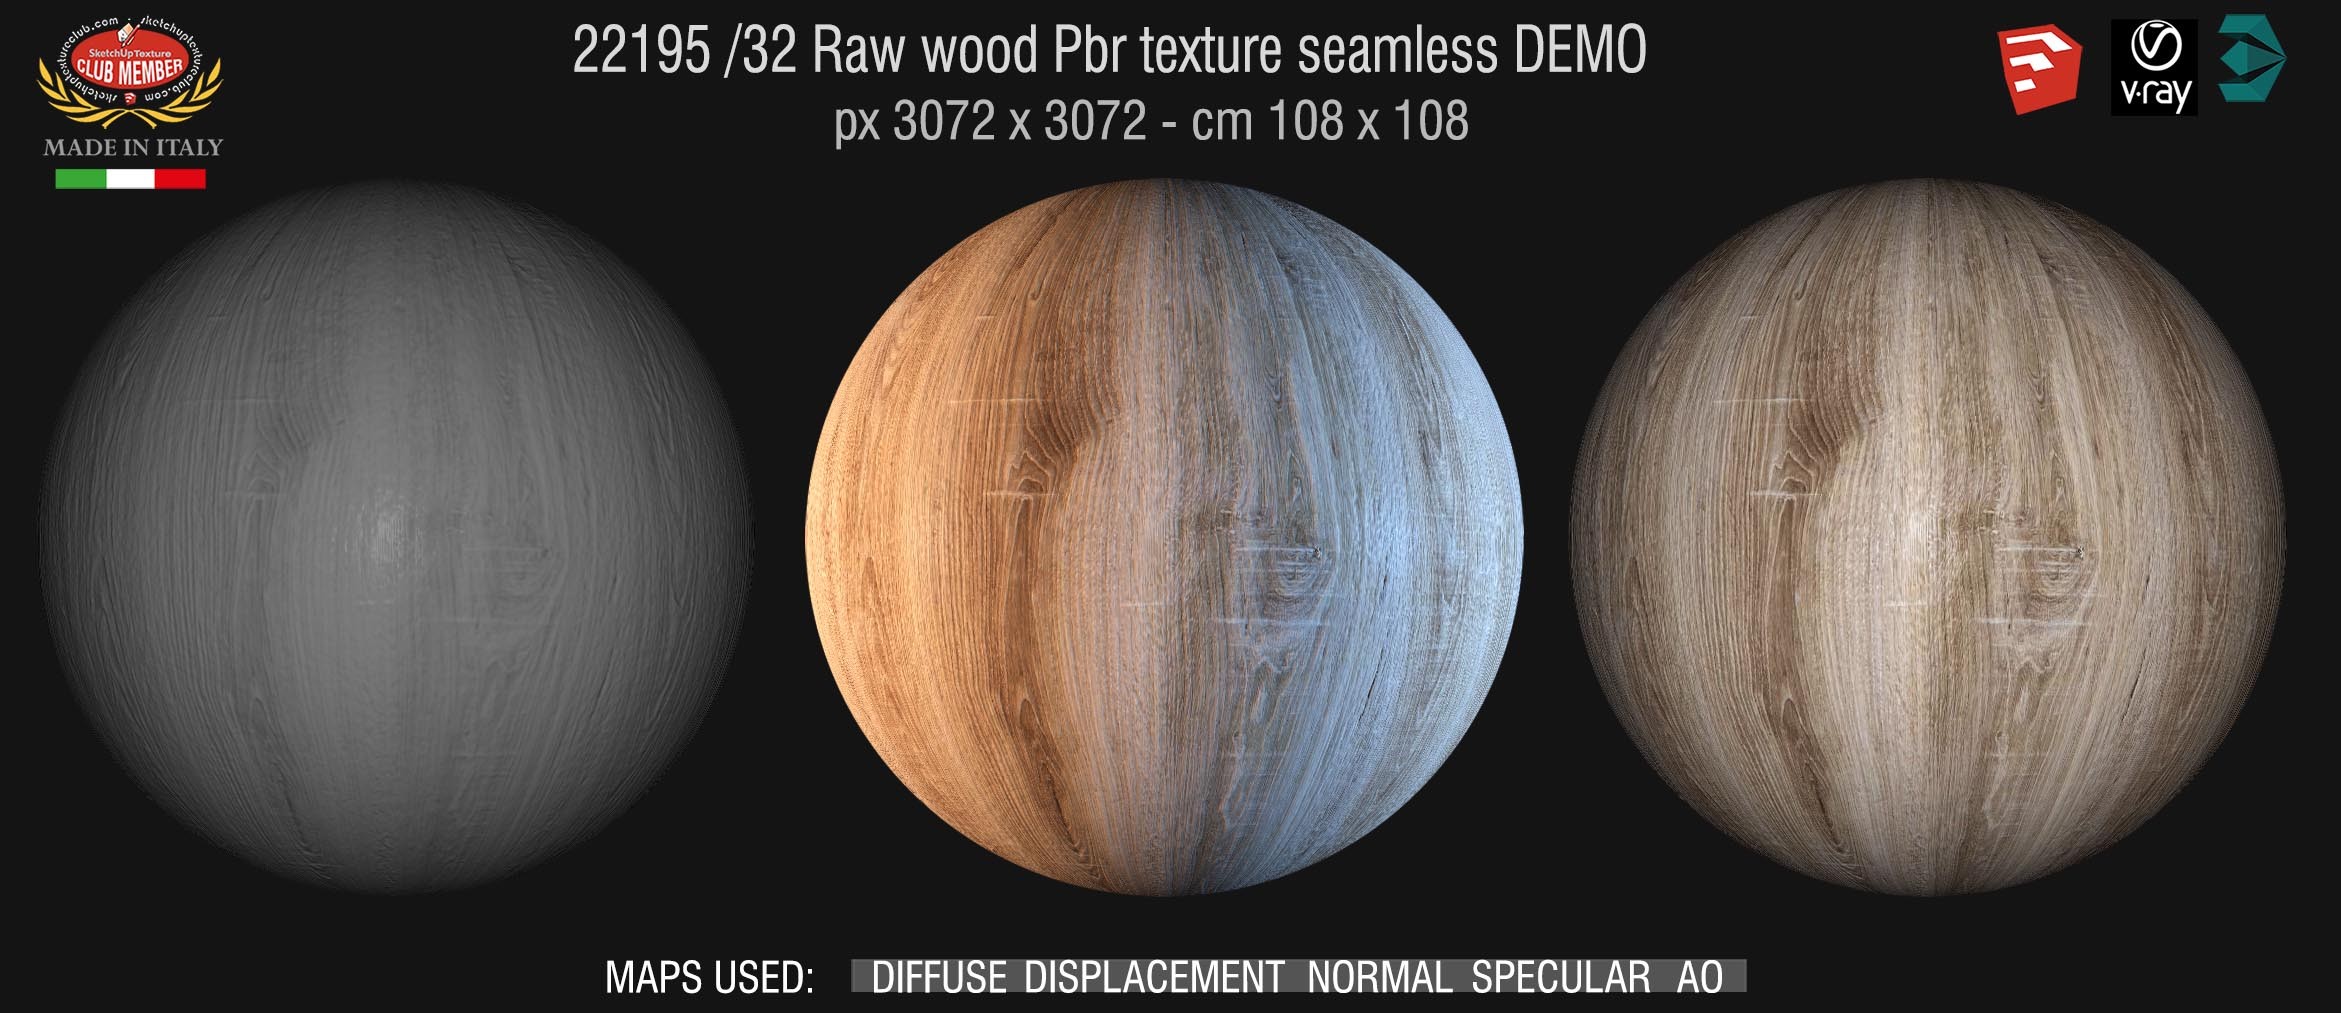 22195/32 Raw wood PBR texture seamless DEMO